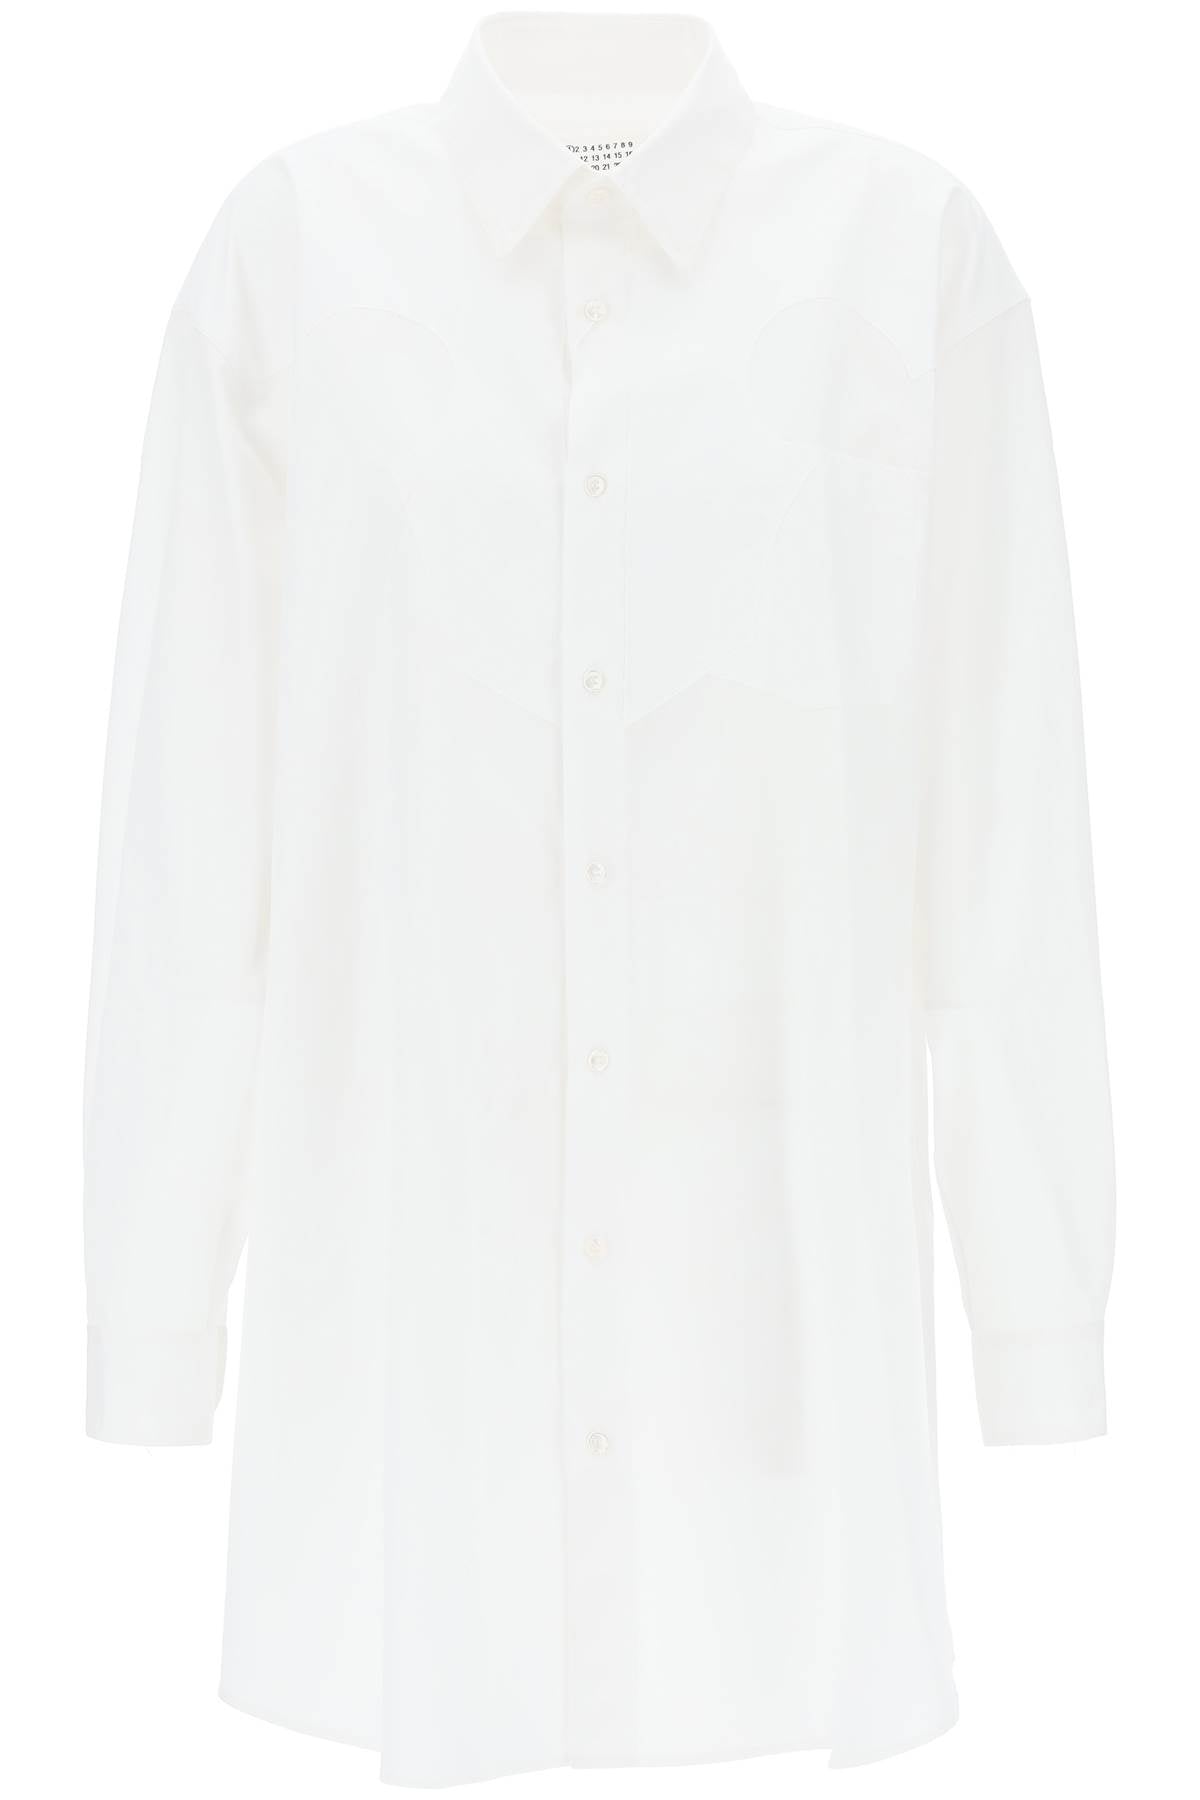 Maison margiela 棉質府綢 chemisier 洋裝 S51DT0014 S43001 OPTIC WHITE